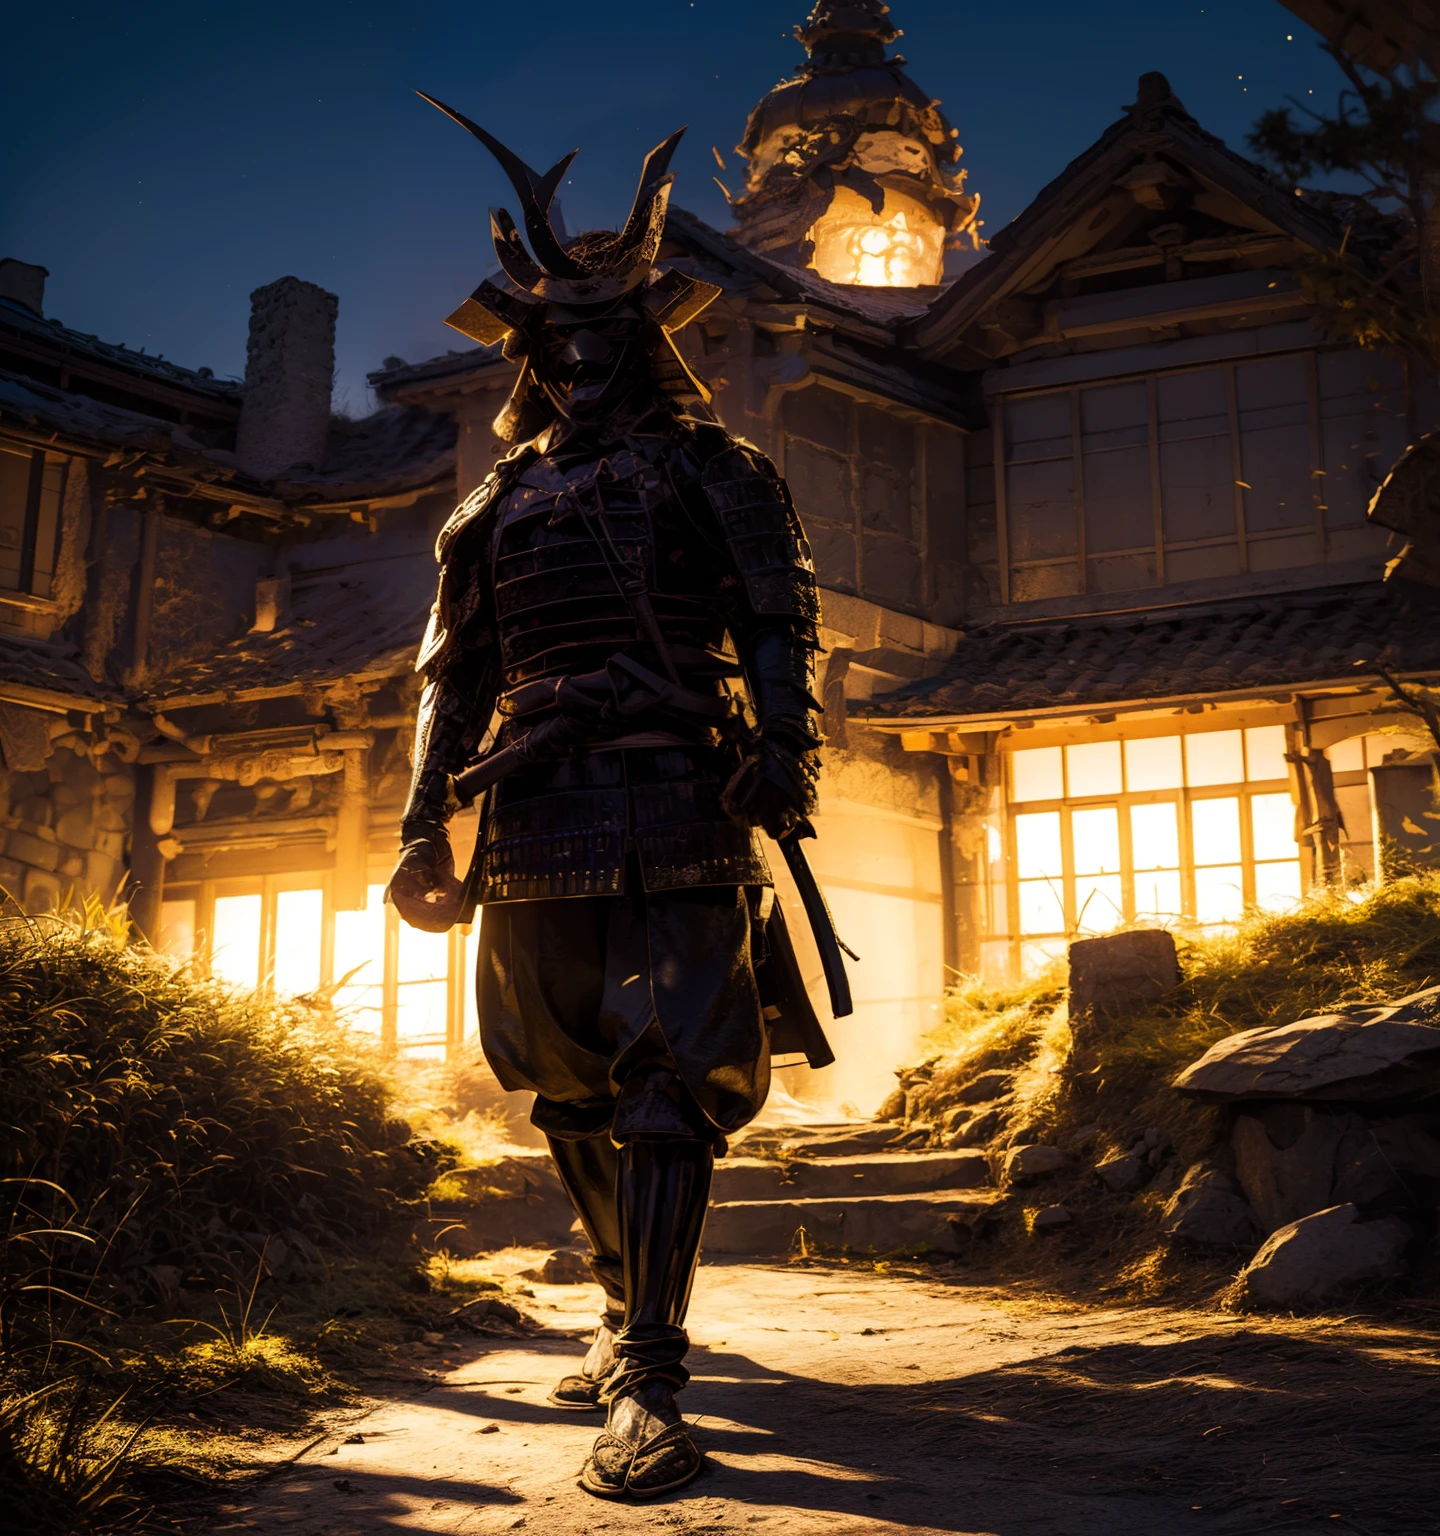 male samurai, ((foto realistic)), ((hannya mask)), full body, badass pose, ((black armor)), edo period, devastation, burning castle, moon and stars in the background.